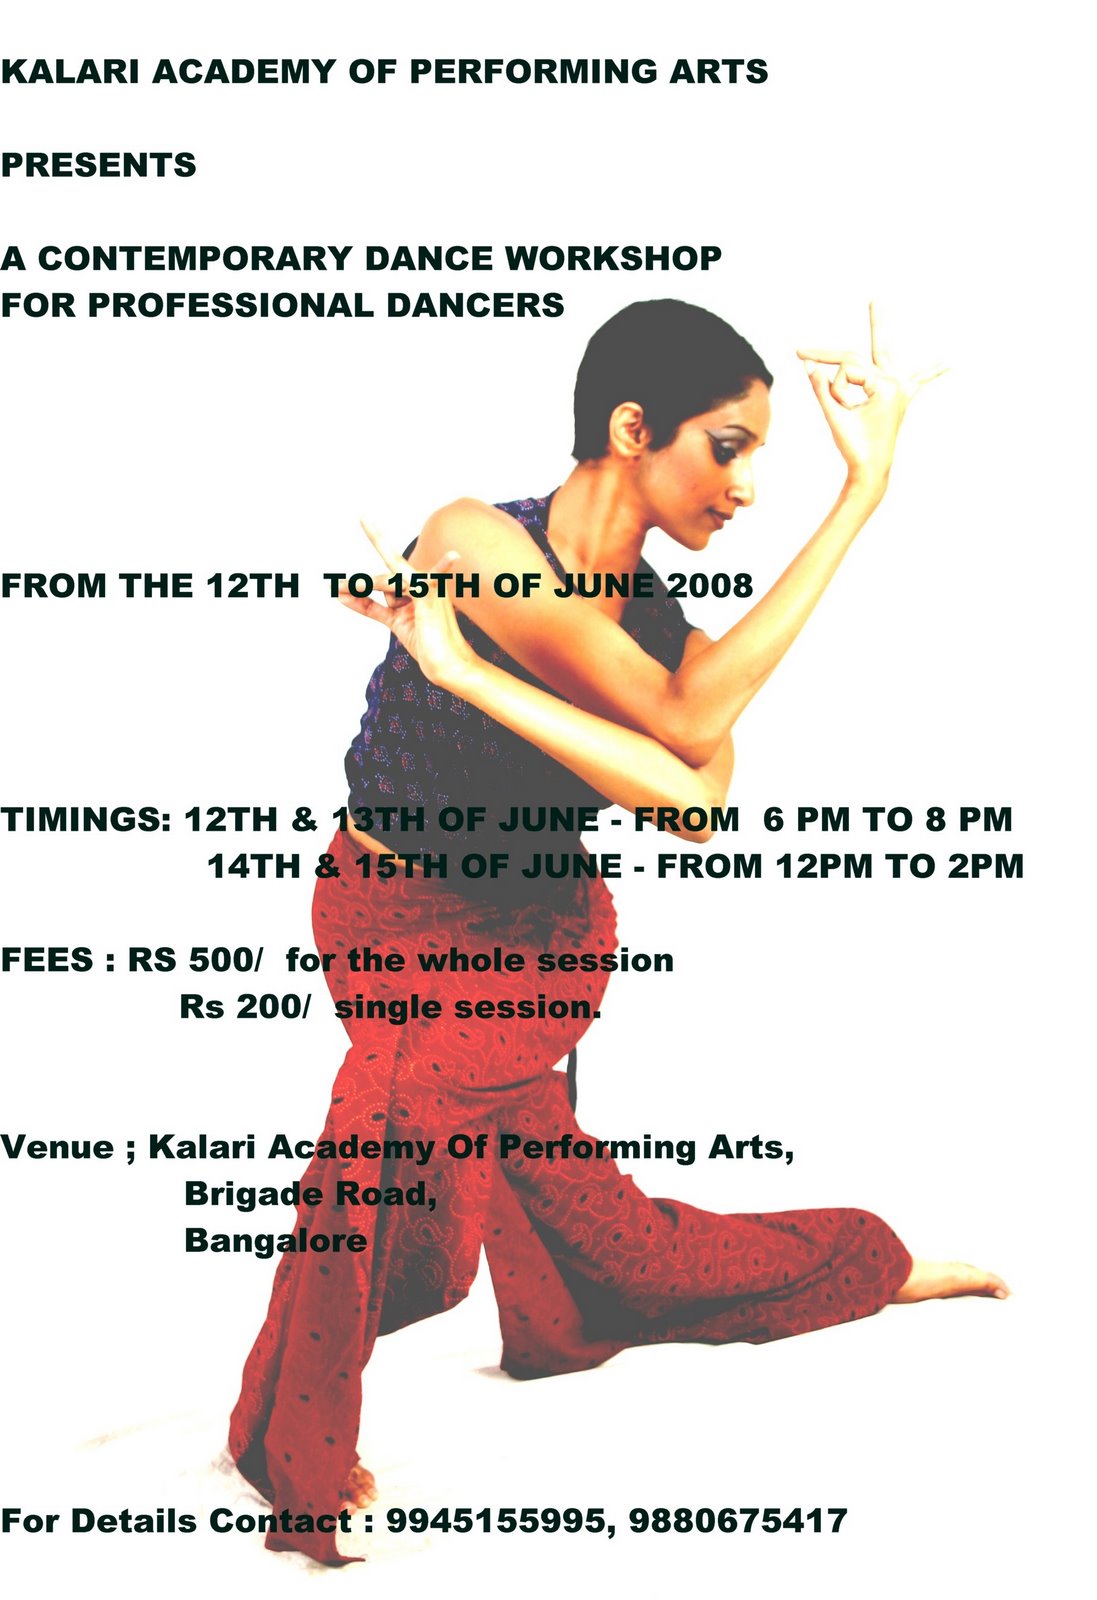 [Kalari+Academy+of+Performing+Arts'+contemporary+dance+workshop.JPG]